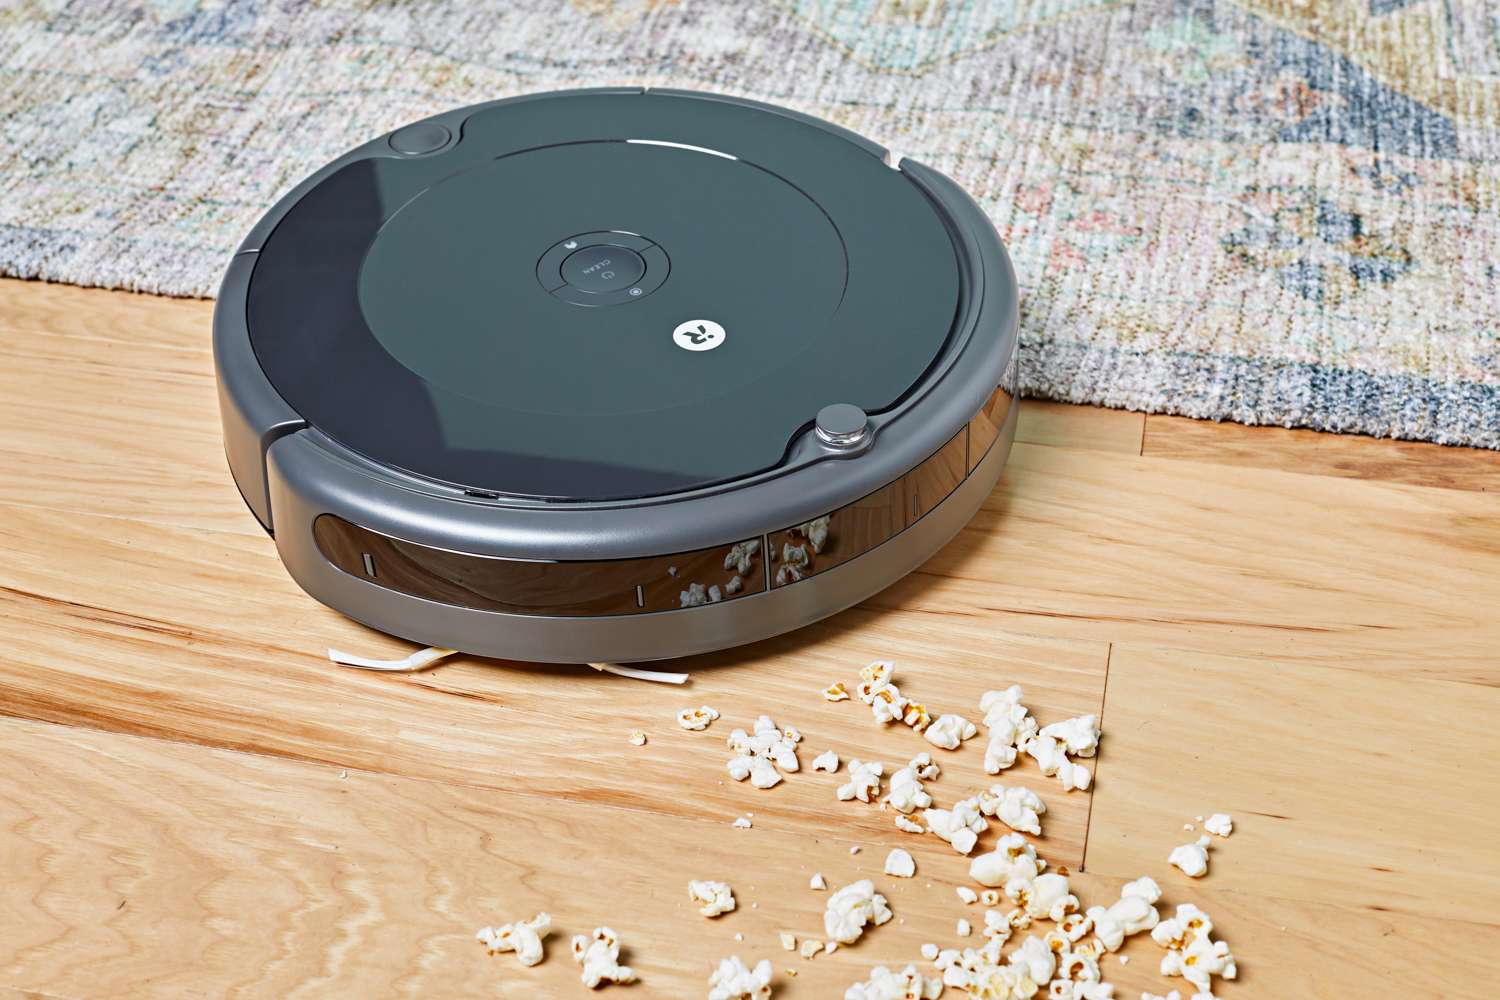 iRobot Roomba 694 Robot Vacuum cleaning popcorn from a hardwood floor near a rug